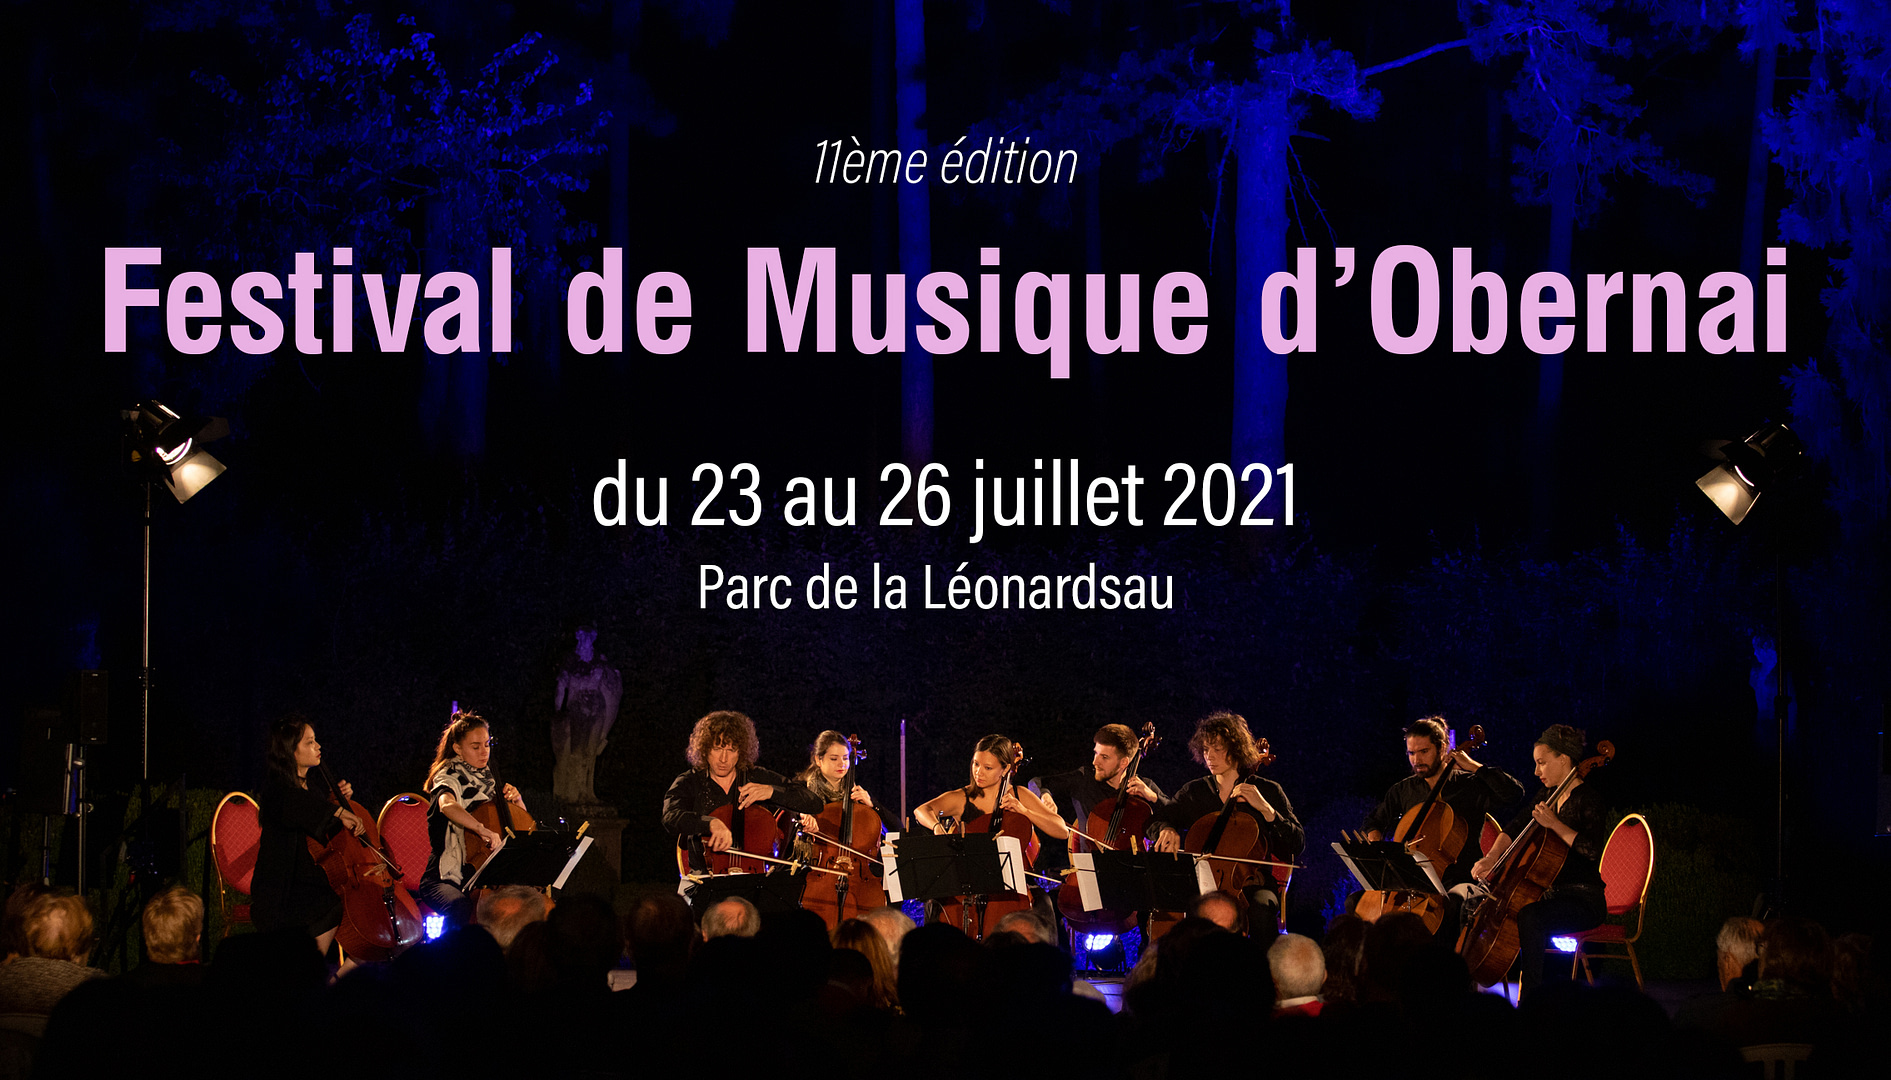 festival de musique obernai 2021